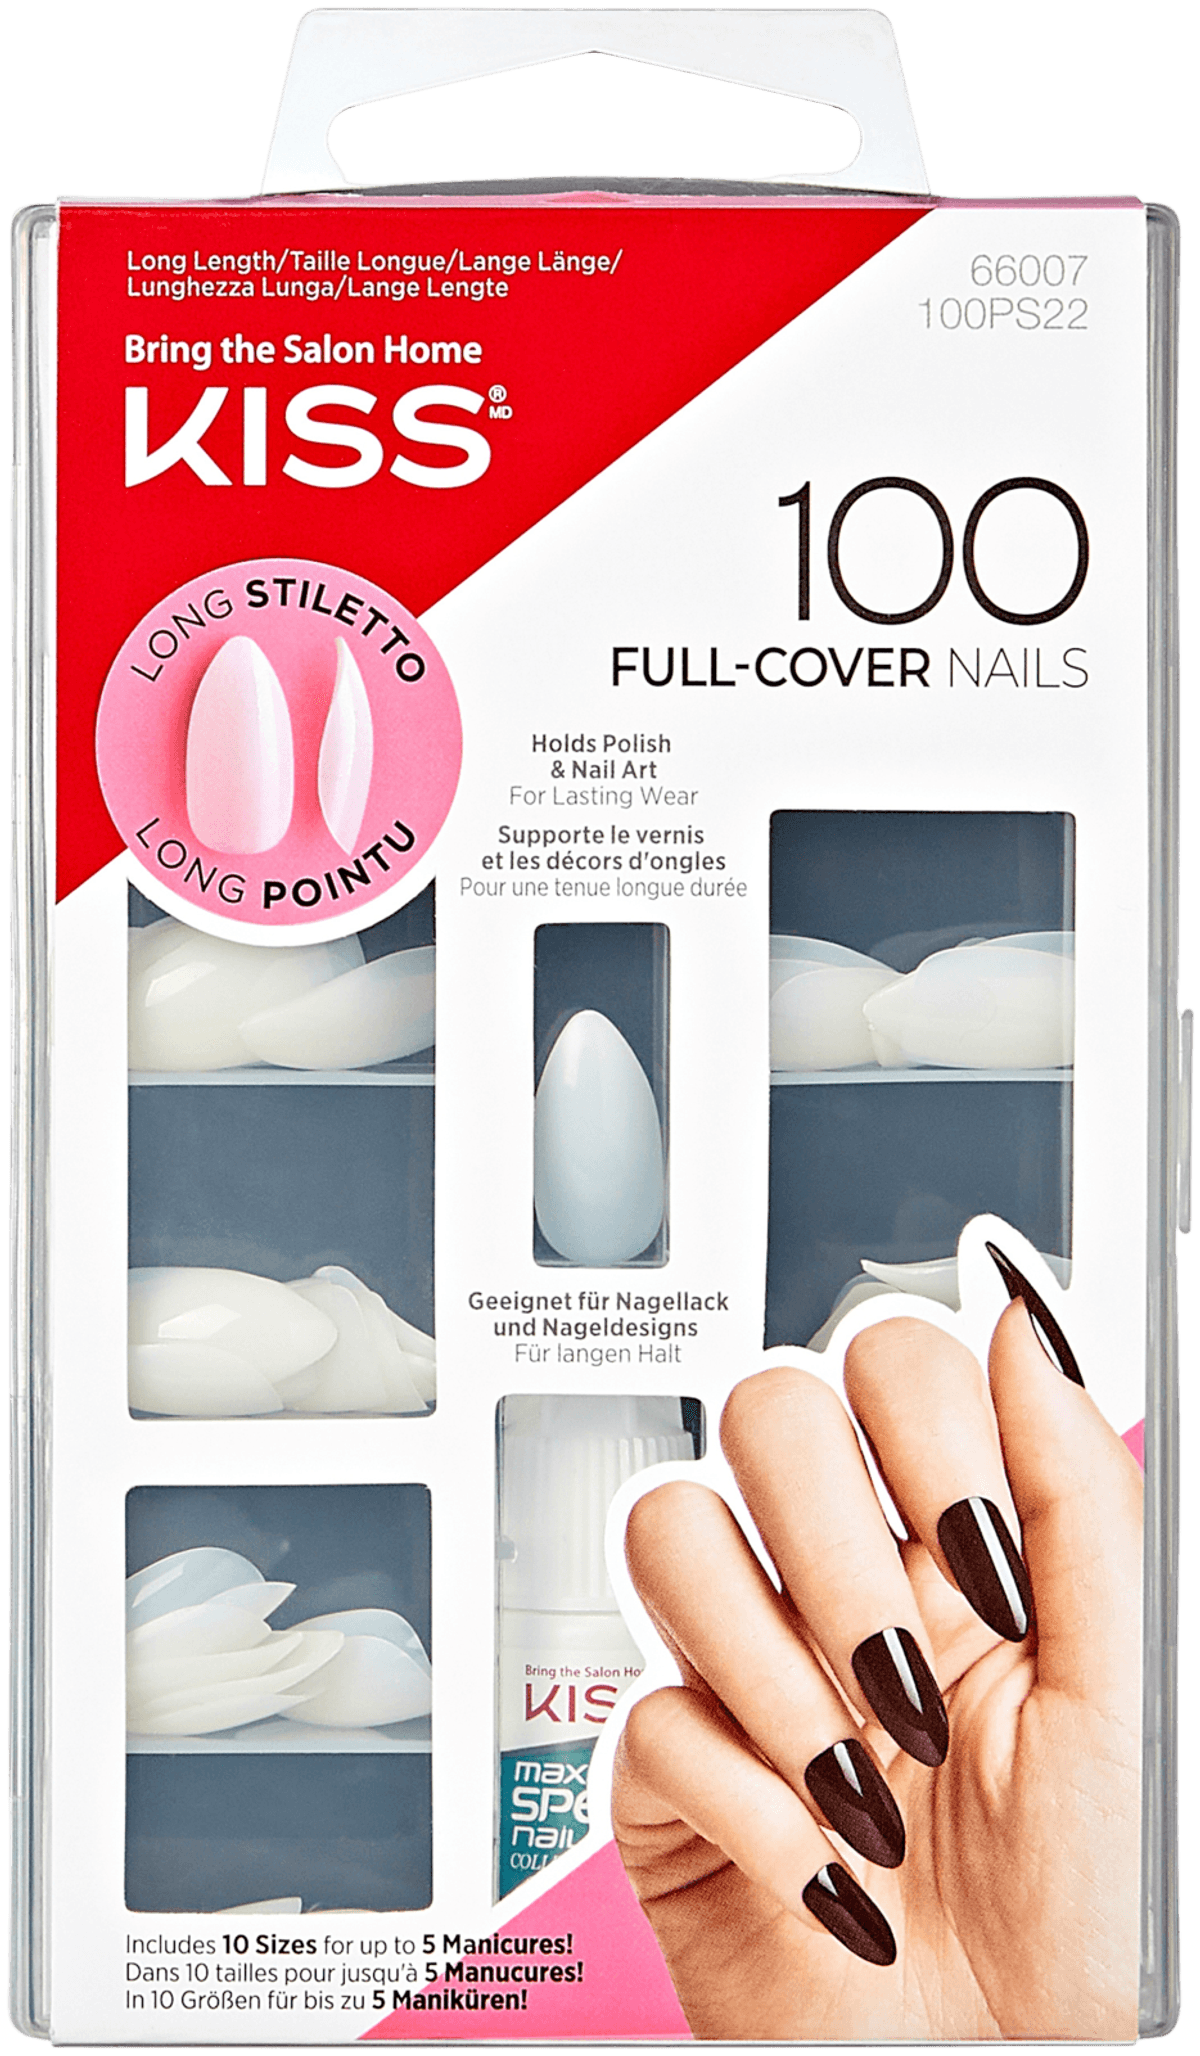 DIY Fake Nails | Kiss Full Cover Nails Active Oval Shape - YouTube